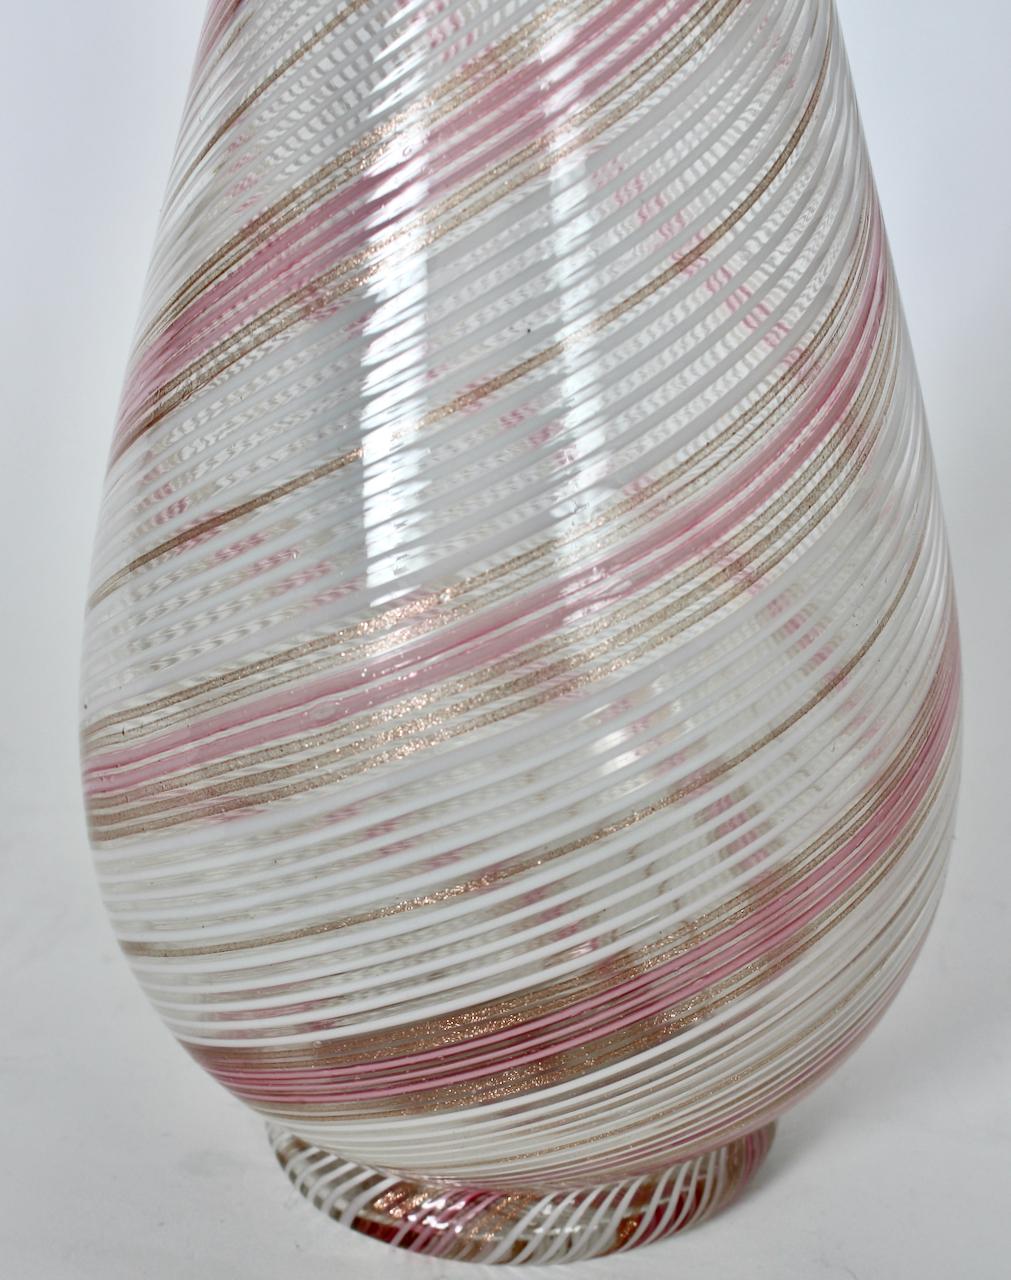 Dino Martens Mezza Filigrana Pink, White & Rose Gold Murano Vase, 1950's For Sale 7